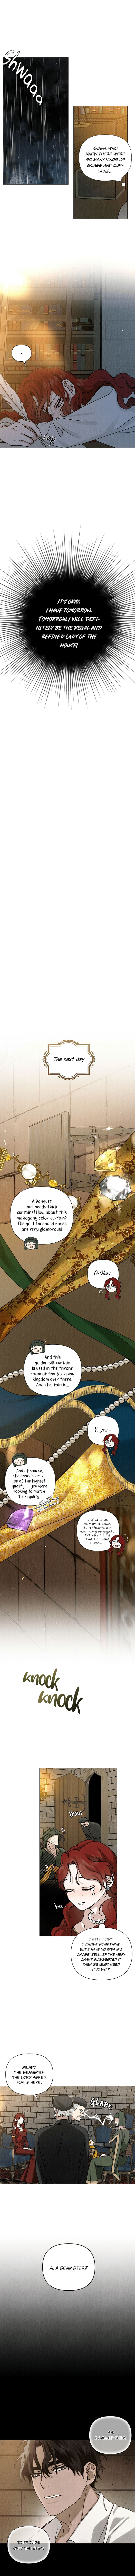 Under The Oak Tree - 13 page 5